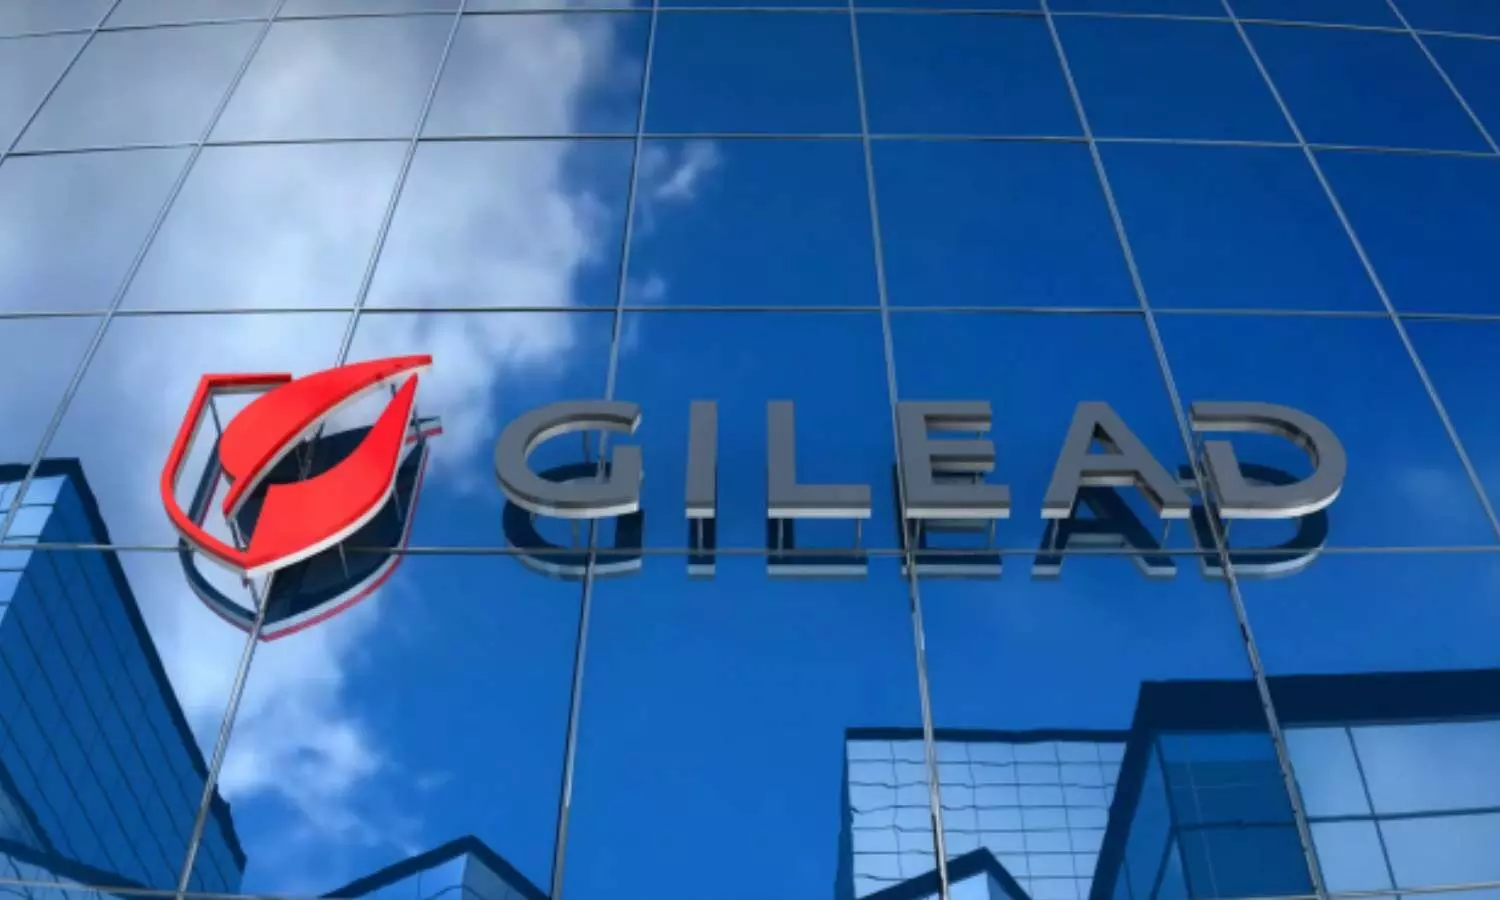 Gilead Sciences, US square off in billion-dollar HIV drug patent trial